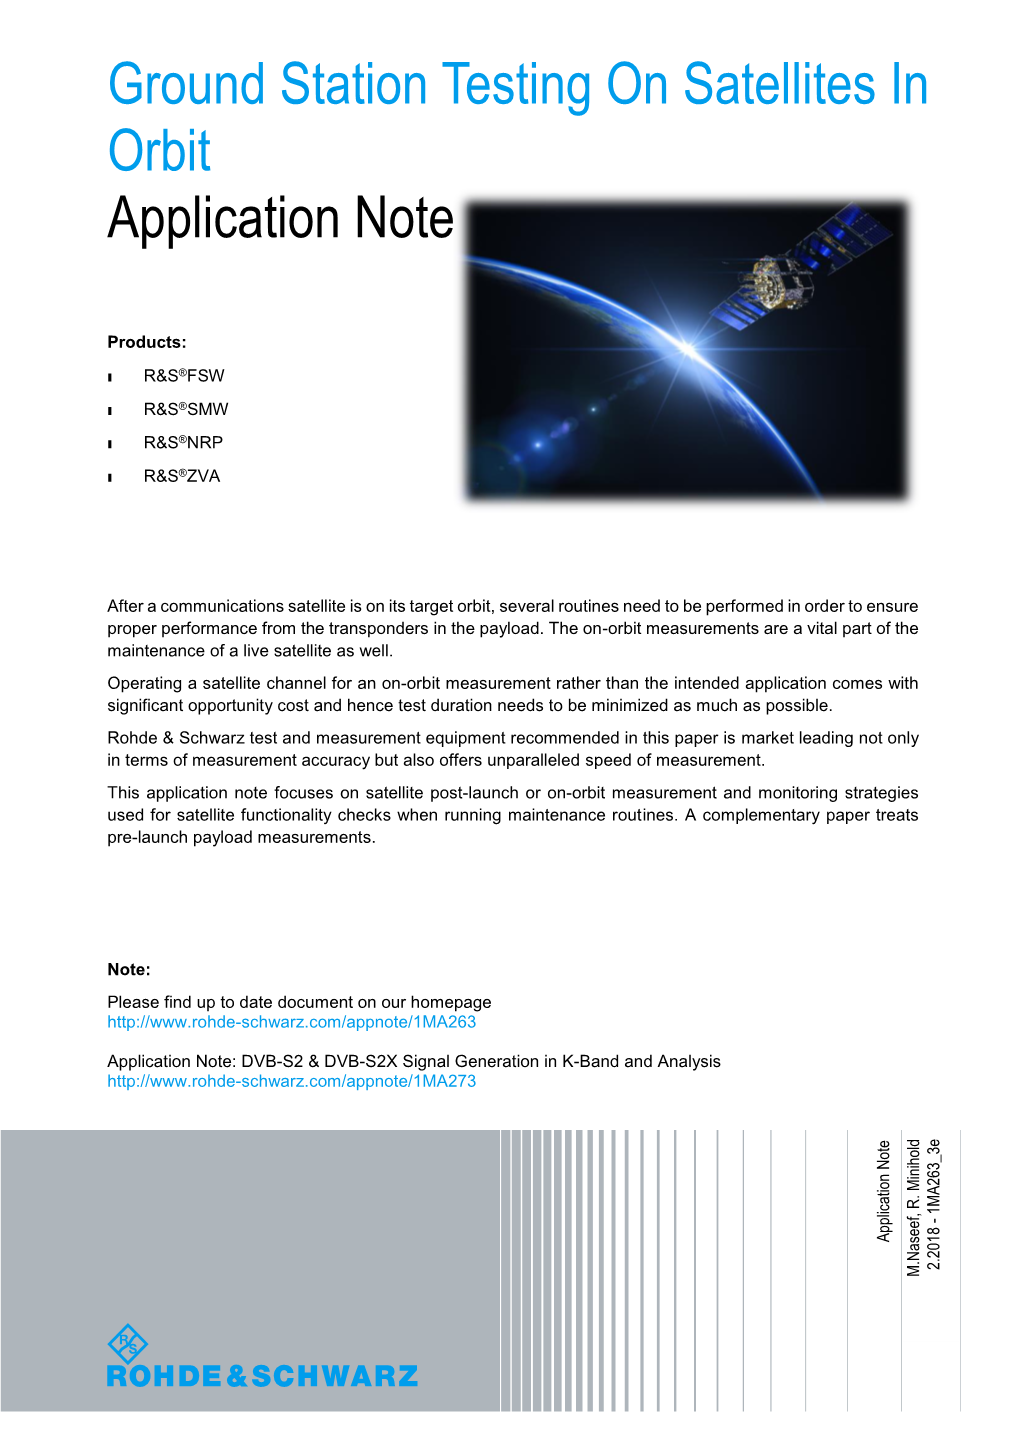 Ground Station Testing on Satellites in Orbit Application Note